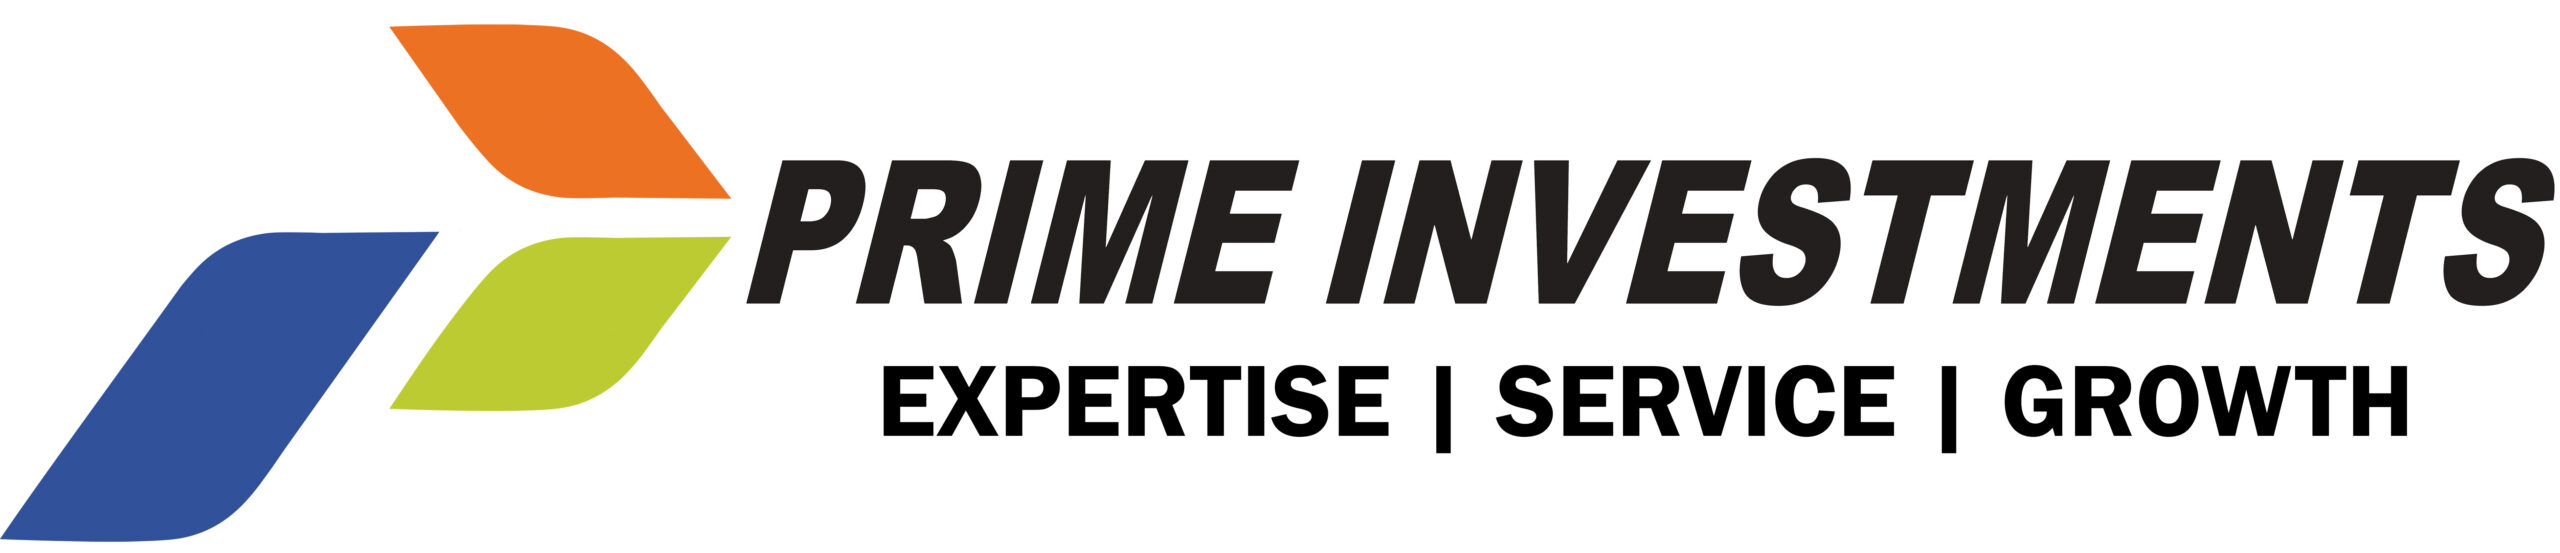 Prime Investment – Prime Investment Pune